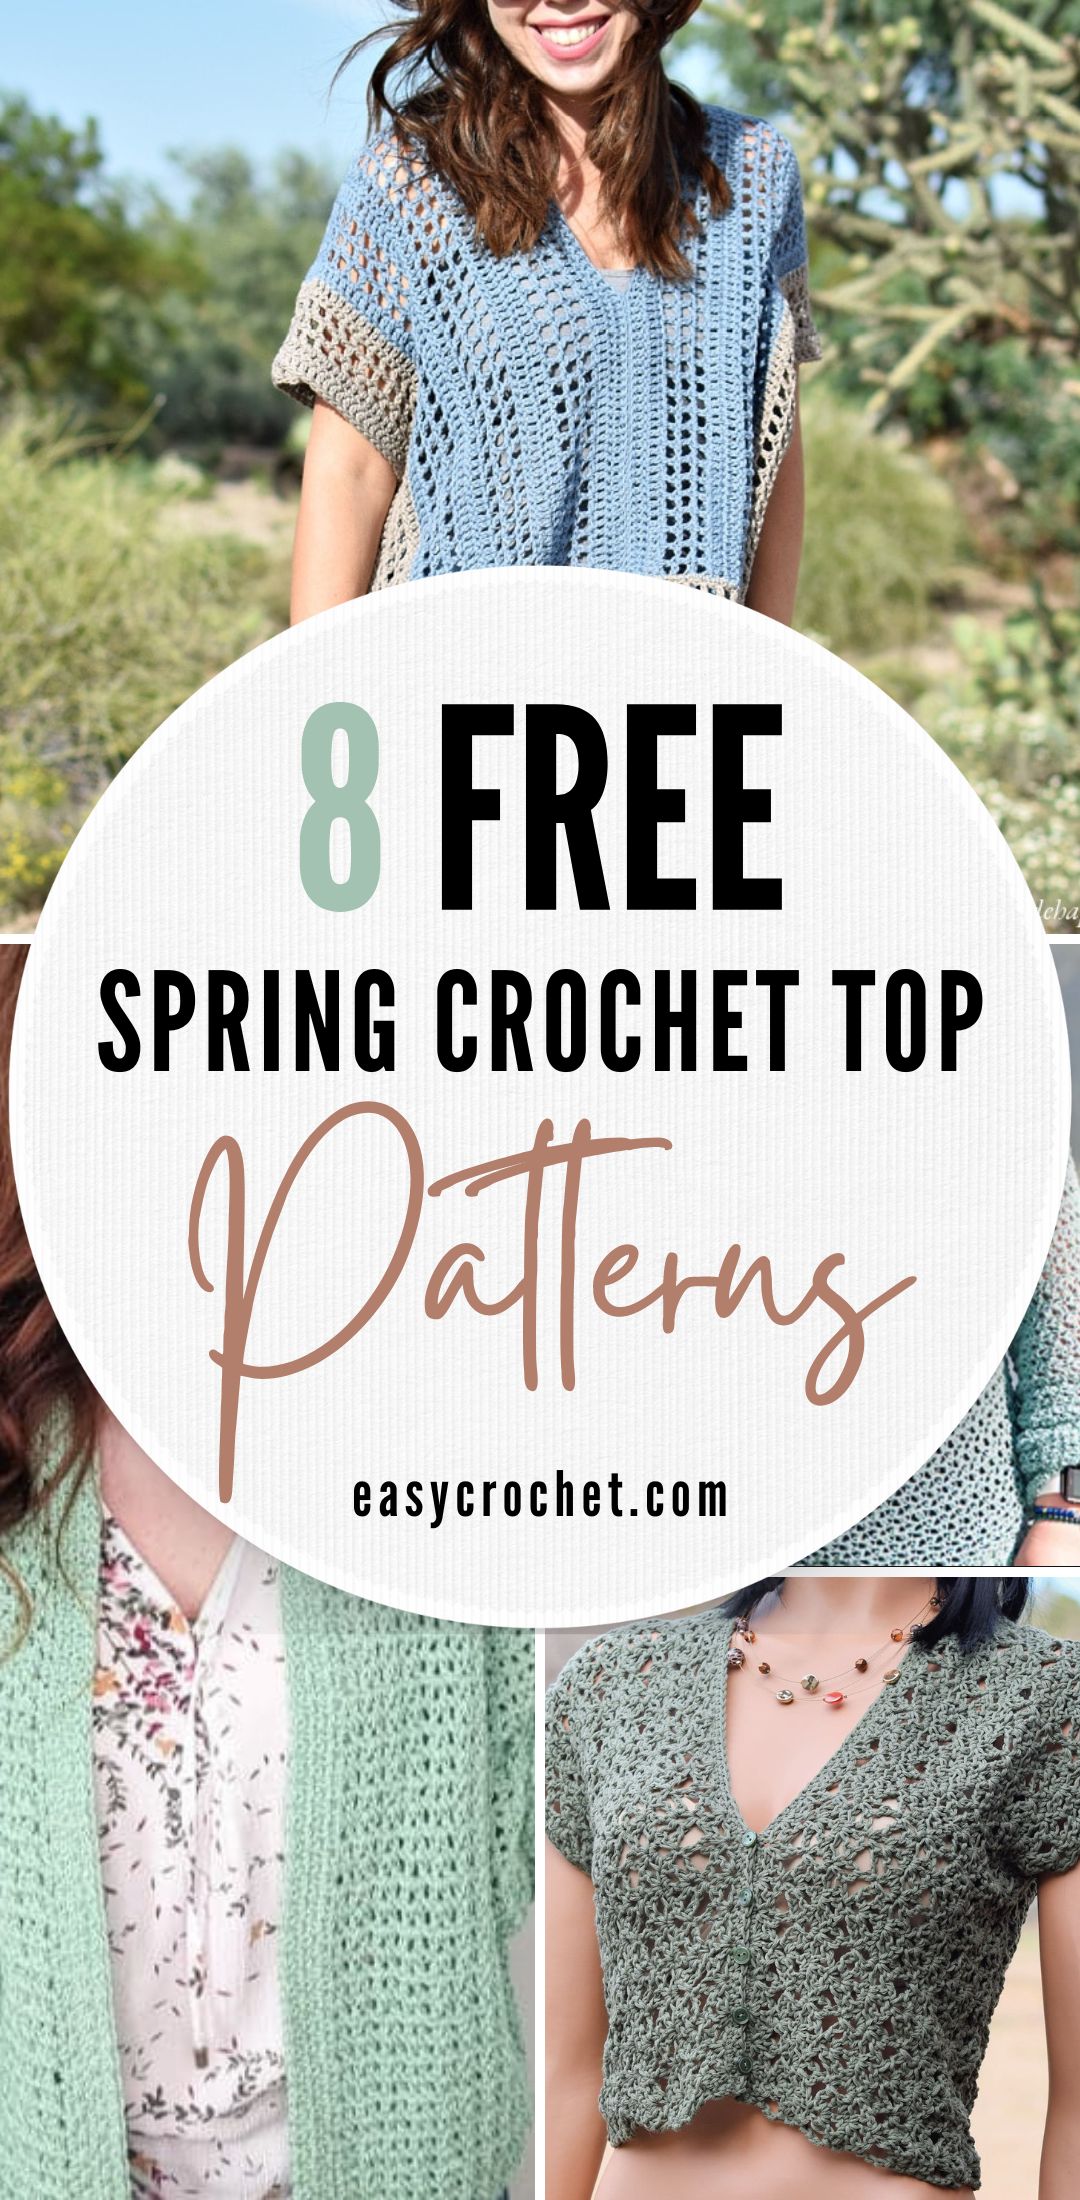 Spring Crochet Top Patterns 